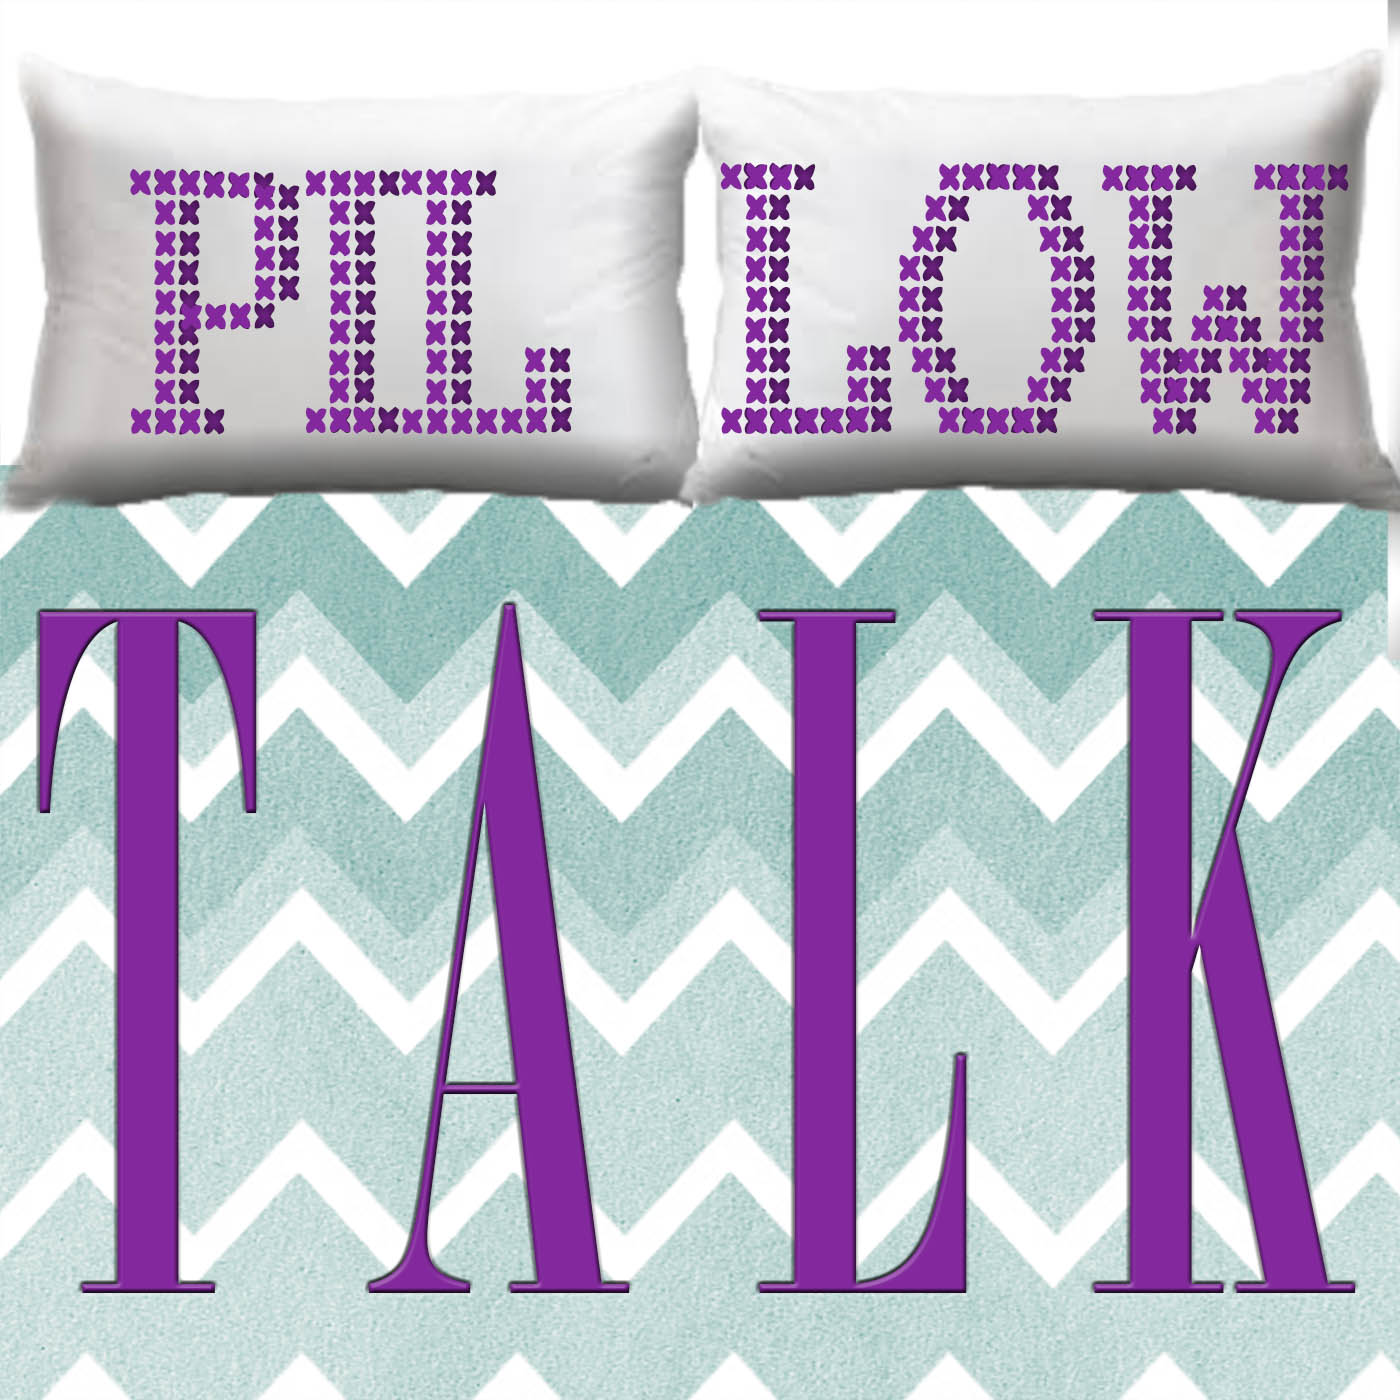 PillowTalk_Logo_1400x1400